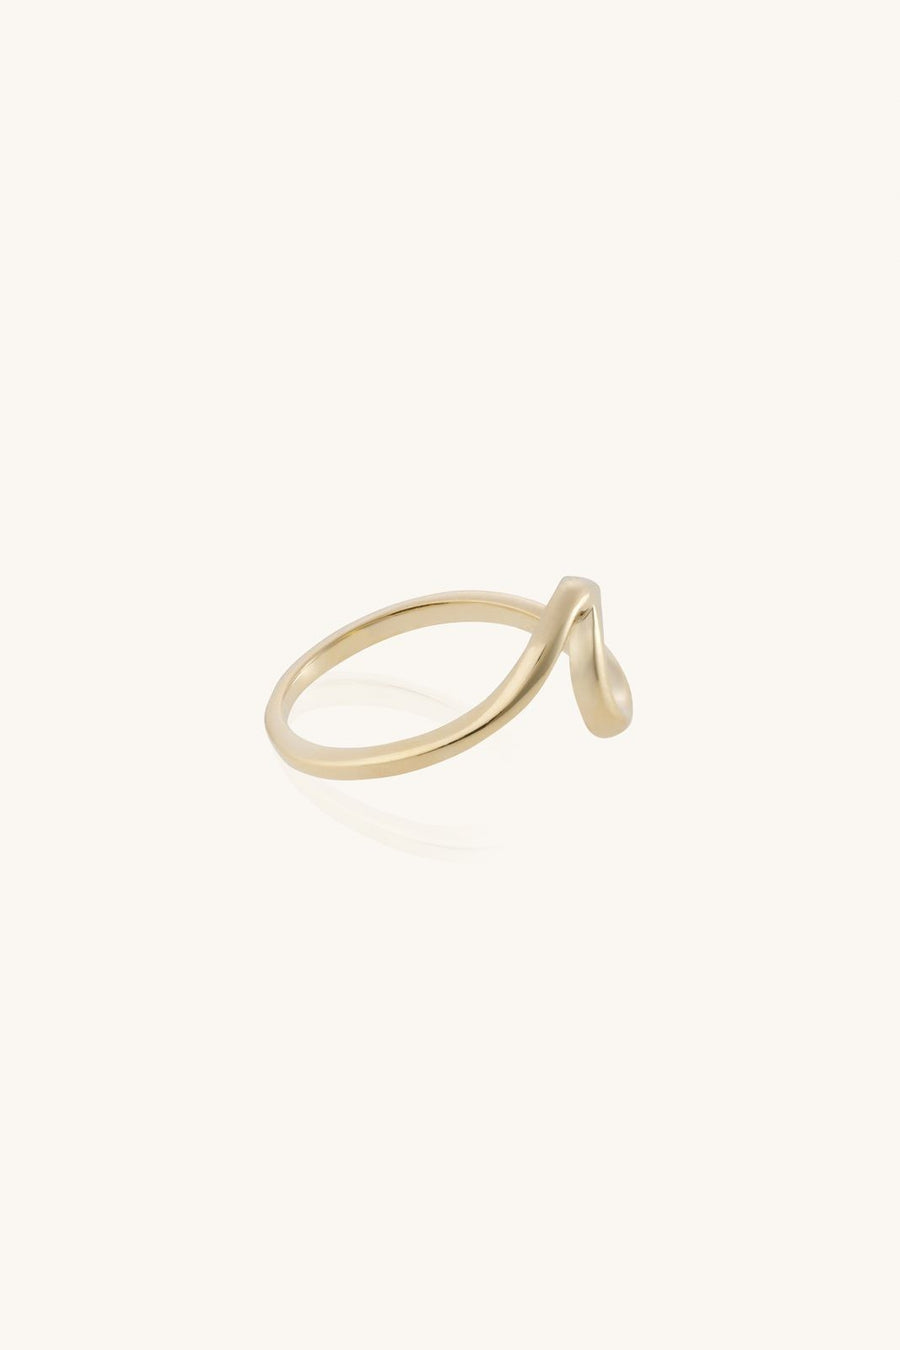 Minimalist Ring, Ocean-inspired Ring, Beachy Ring, Statement Ring